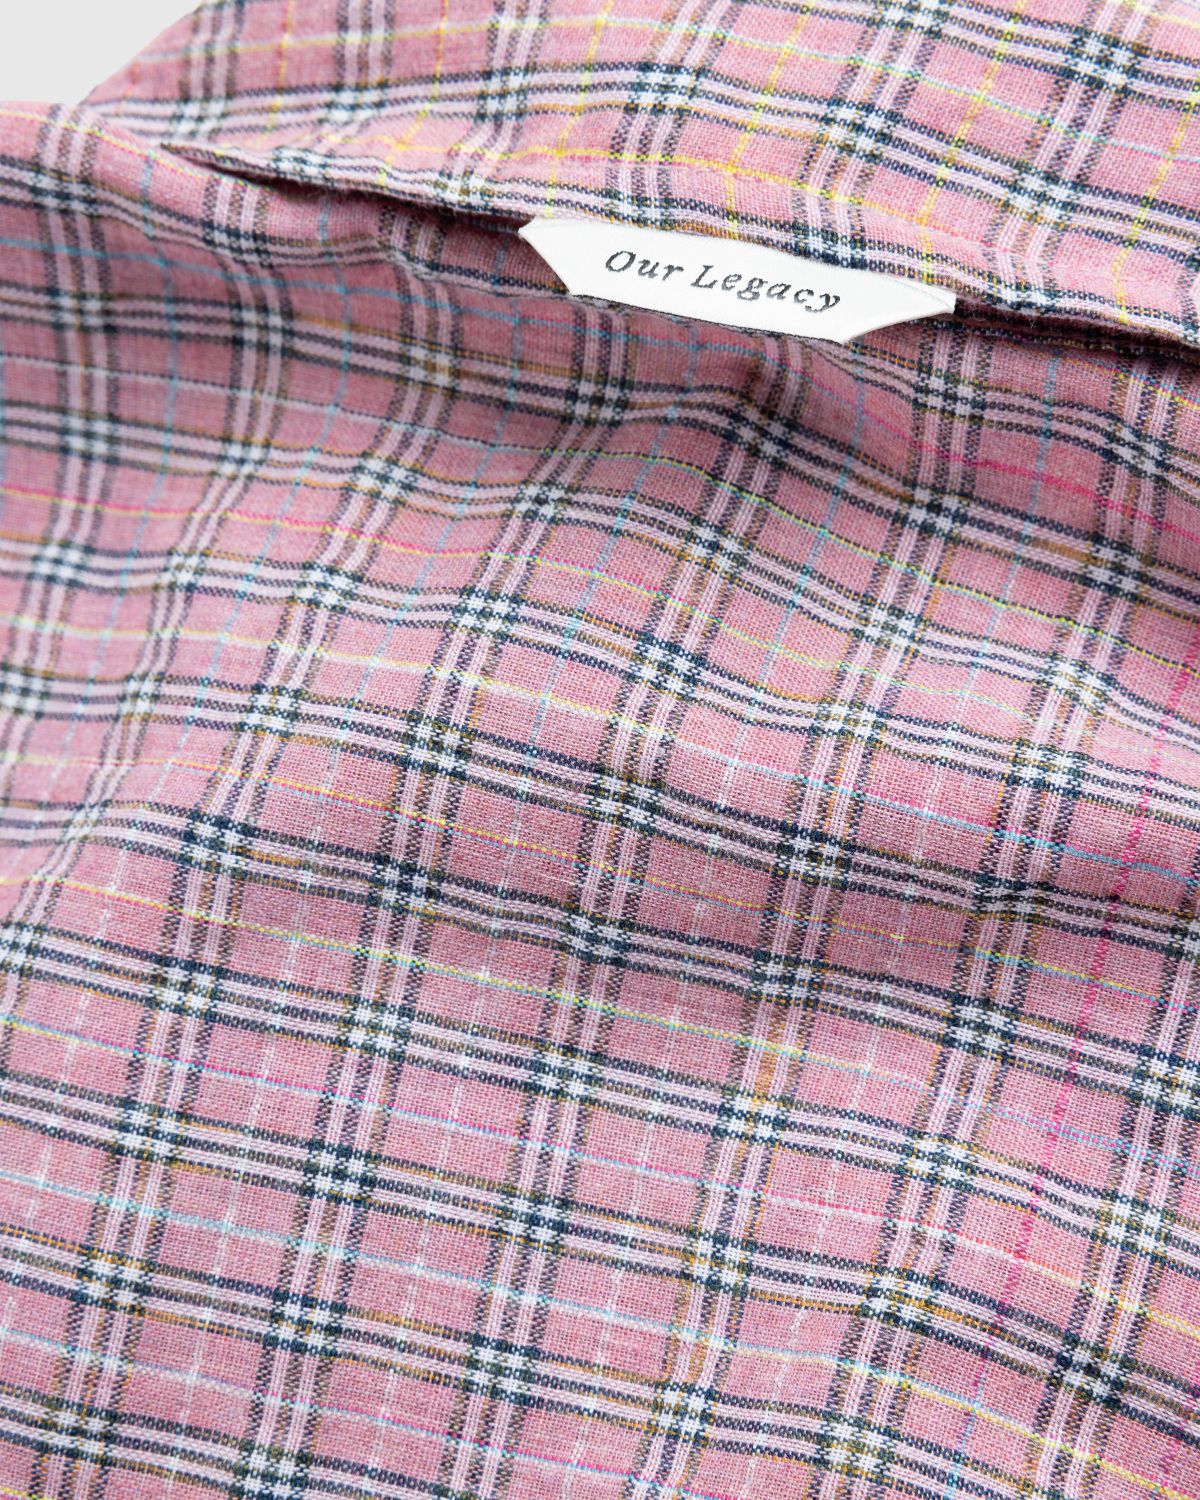 Our Legacy – Borrowed BD Shirt Pink Kimble Check